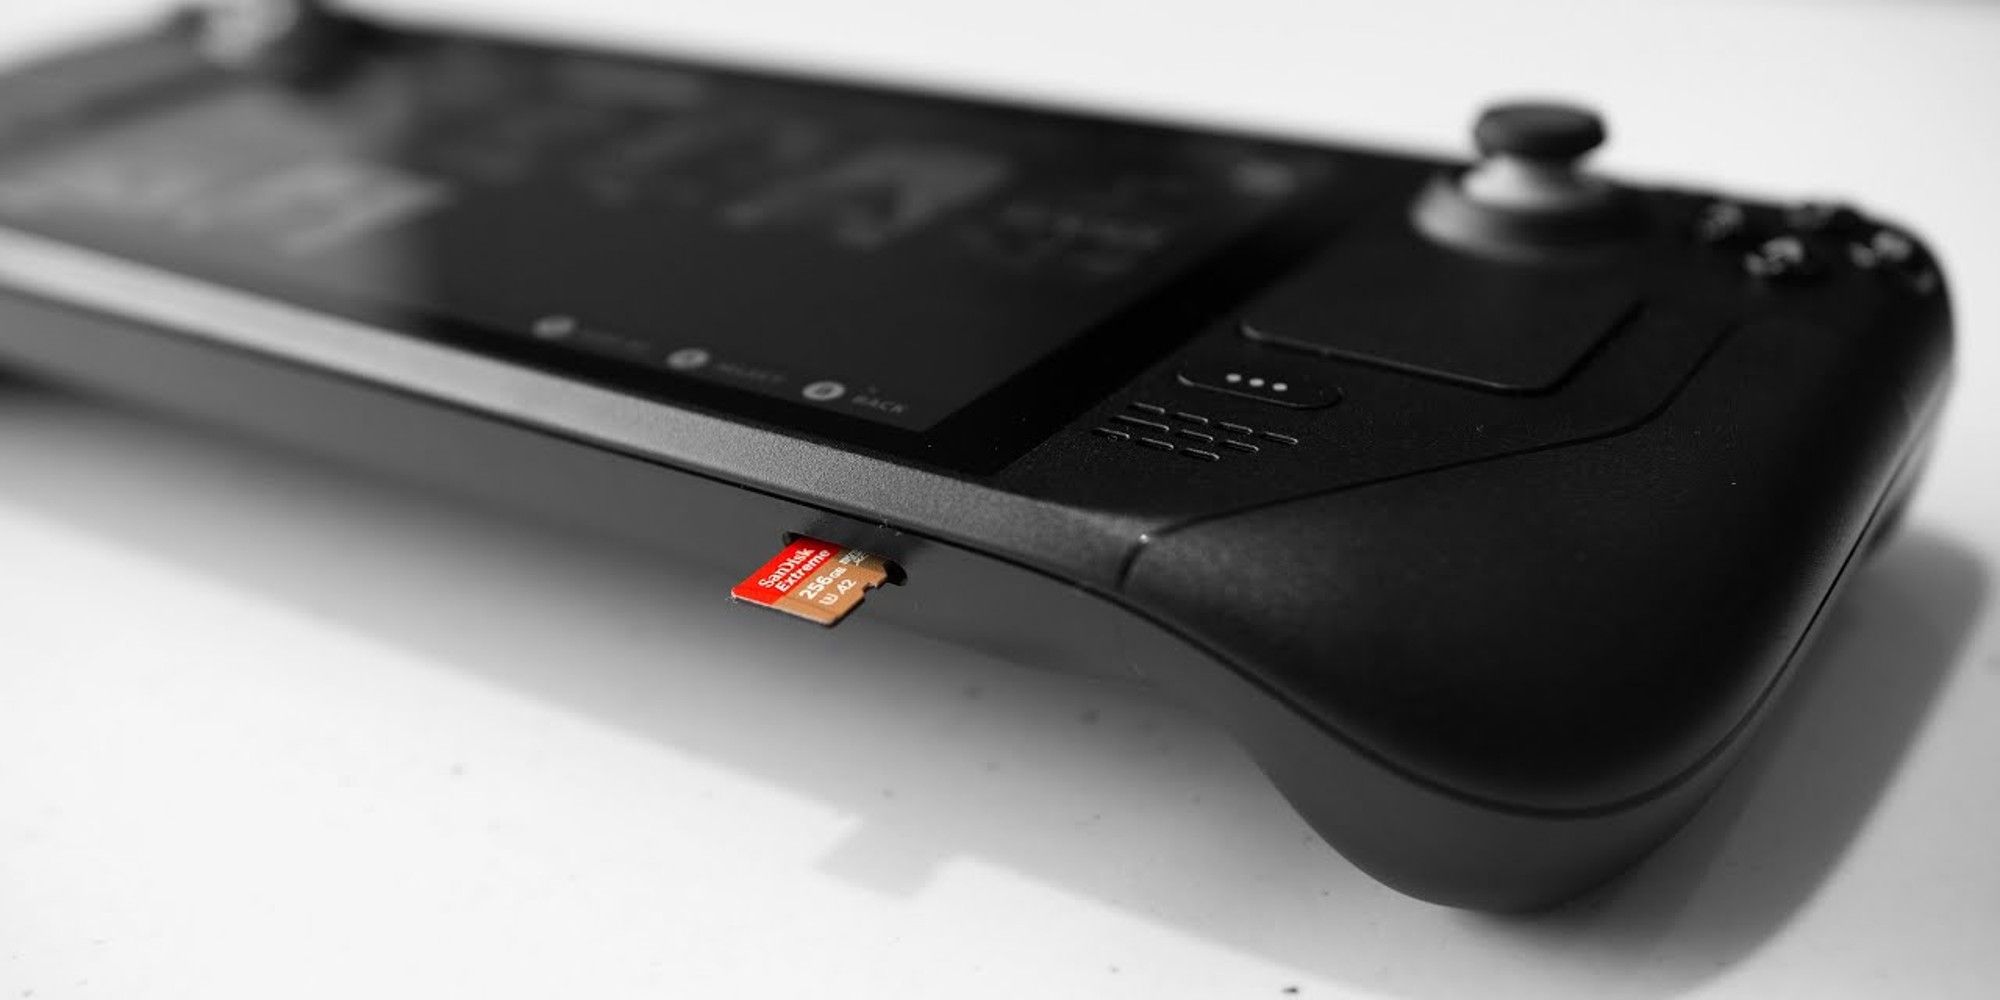 Inserting a microSD card in the Steam Deck